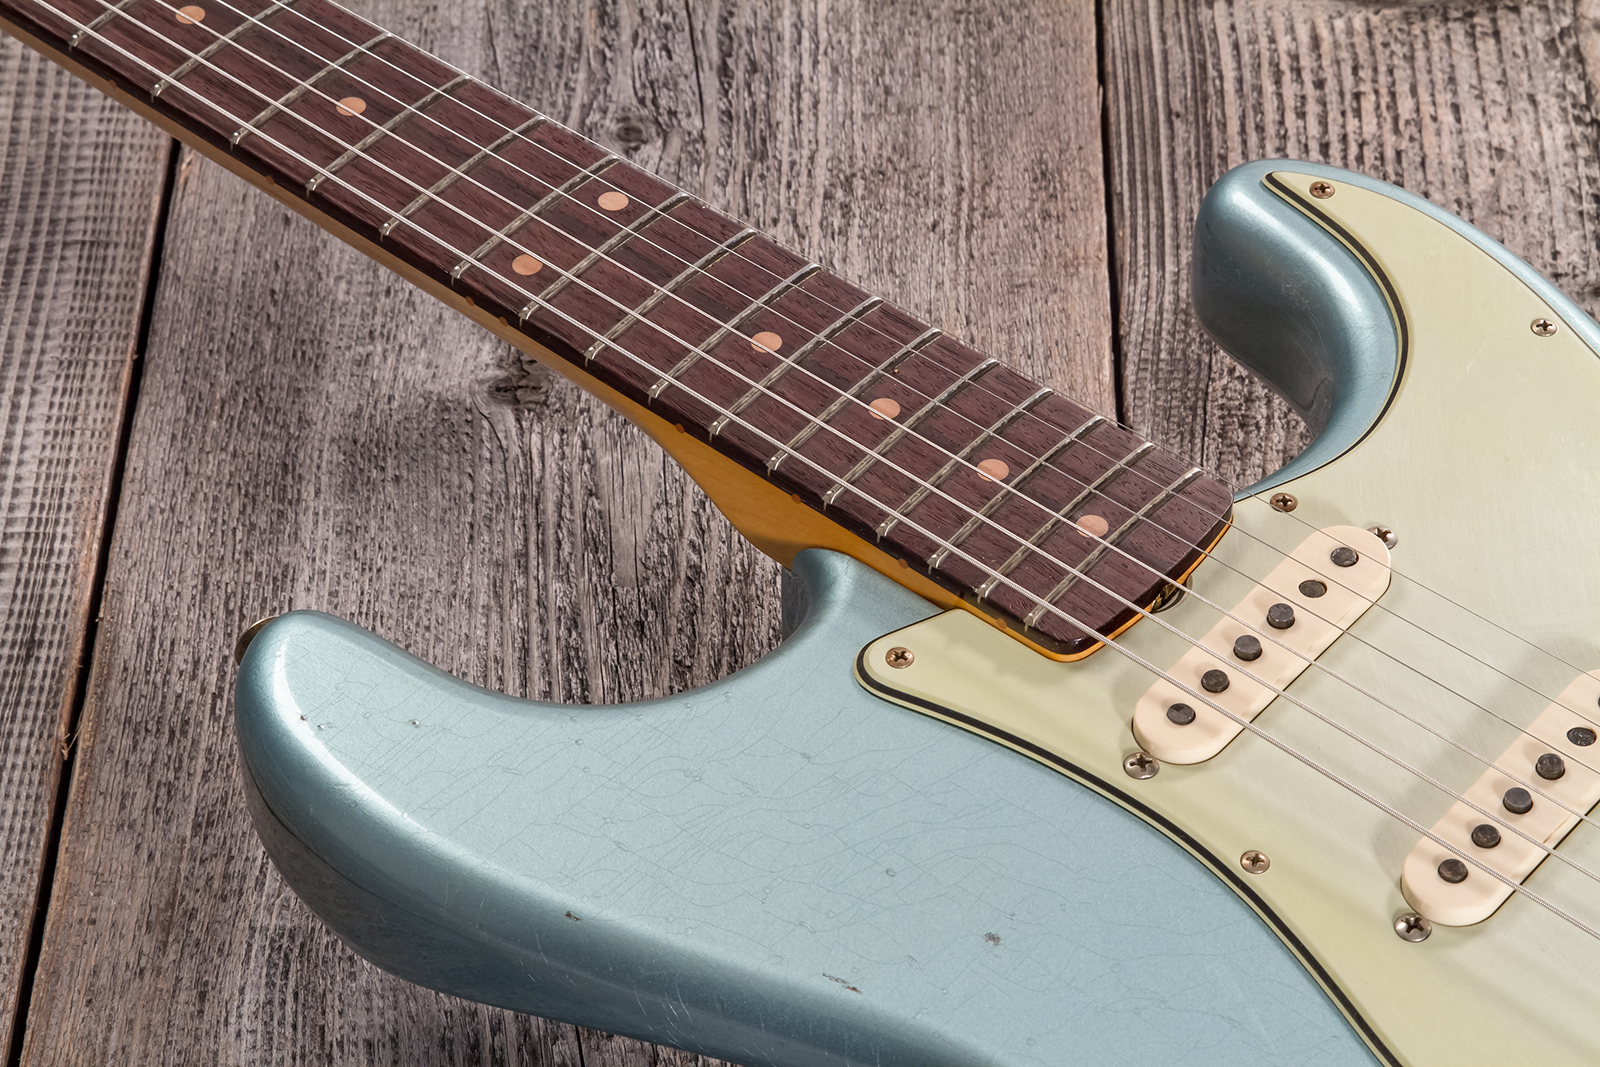 Fender Custom Shop Strat 1959 3s Trem Rw #cz570883 - Journeyman Relic Teal Green Metallic - Str shape electric guitar - Variation 3